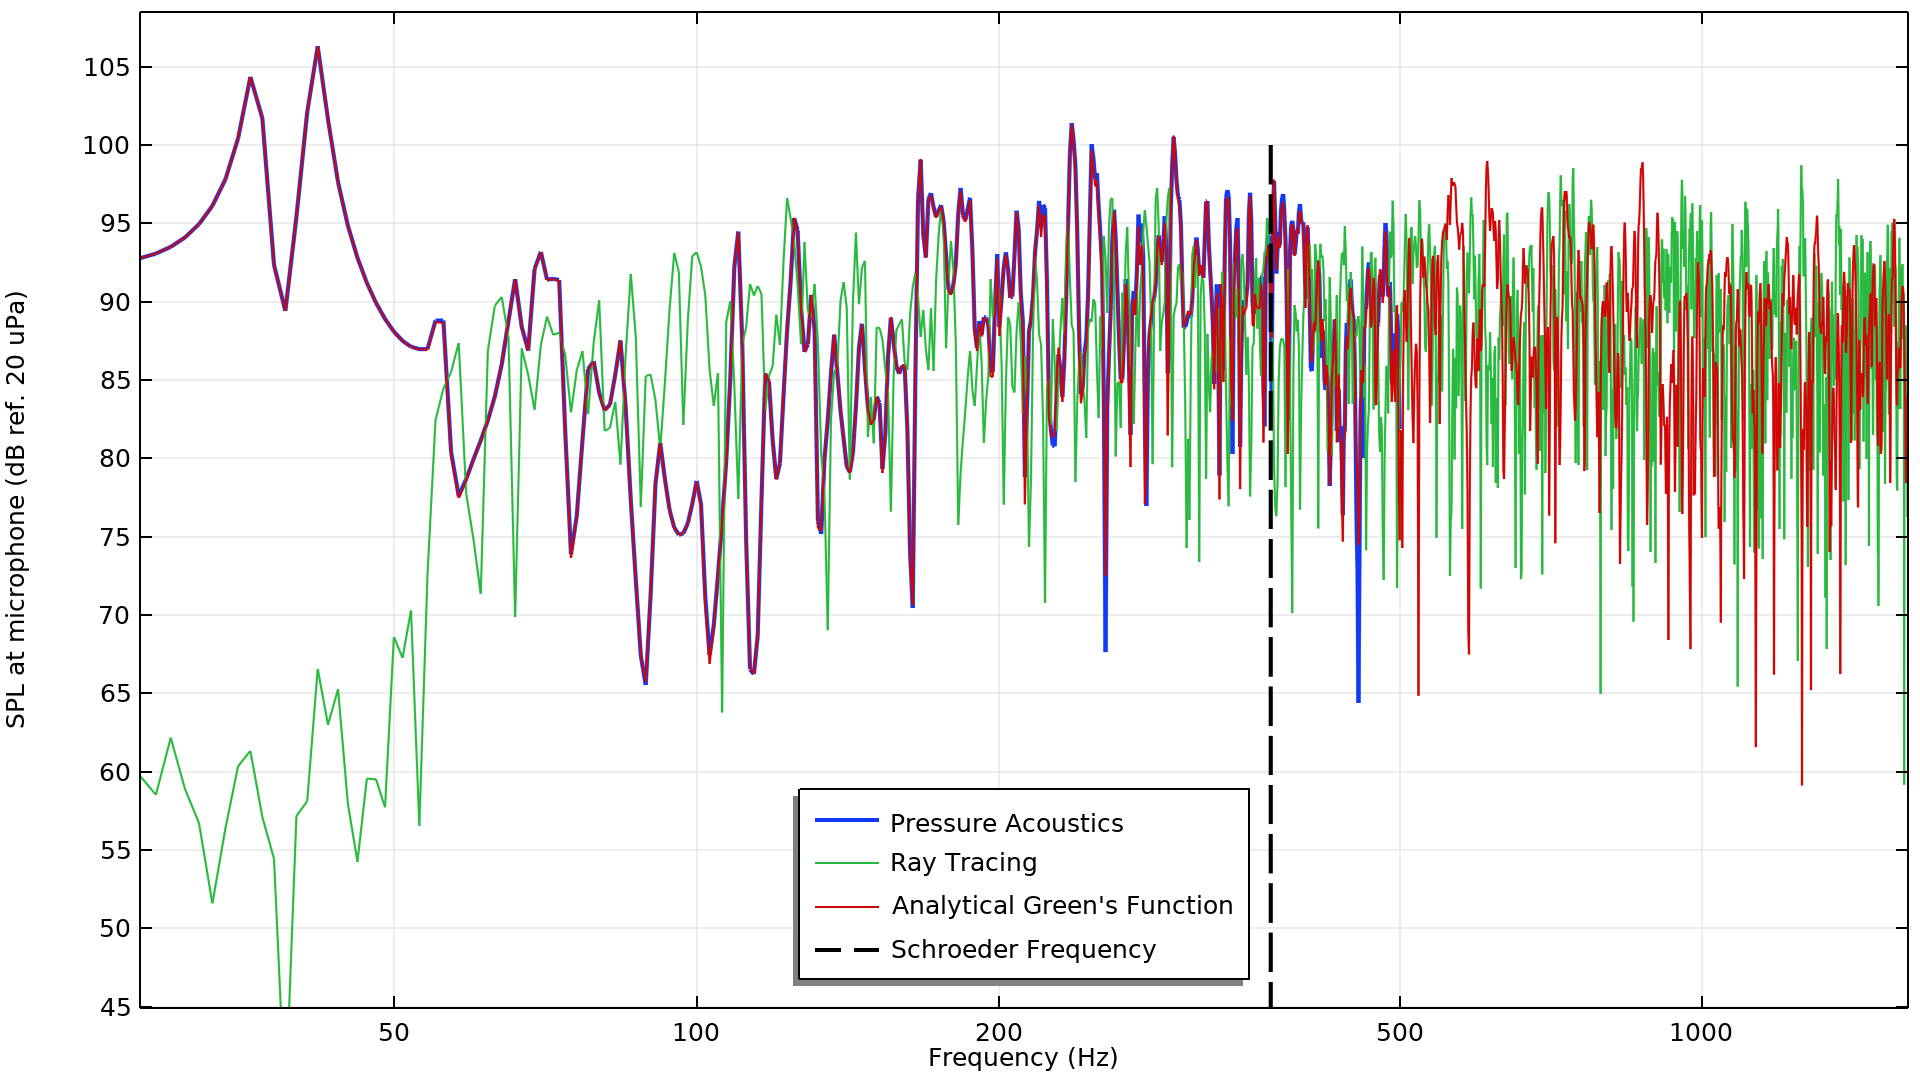 ，X轴为频率（Hz），Y轴为麦克风处声压级（分贝的参考值为20 μPa）的一维图。重点显示了蓝线、绿线、红线和虚线，分别代表压力声学、射线追踪、解析的格林函数和施罗德频率。